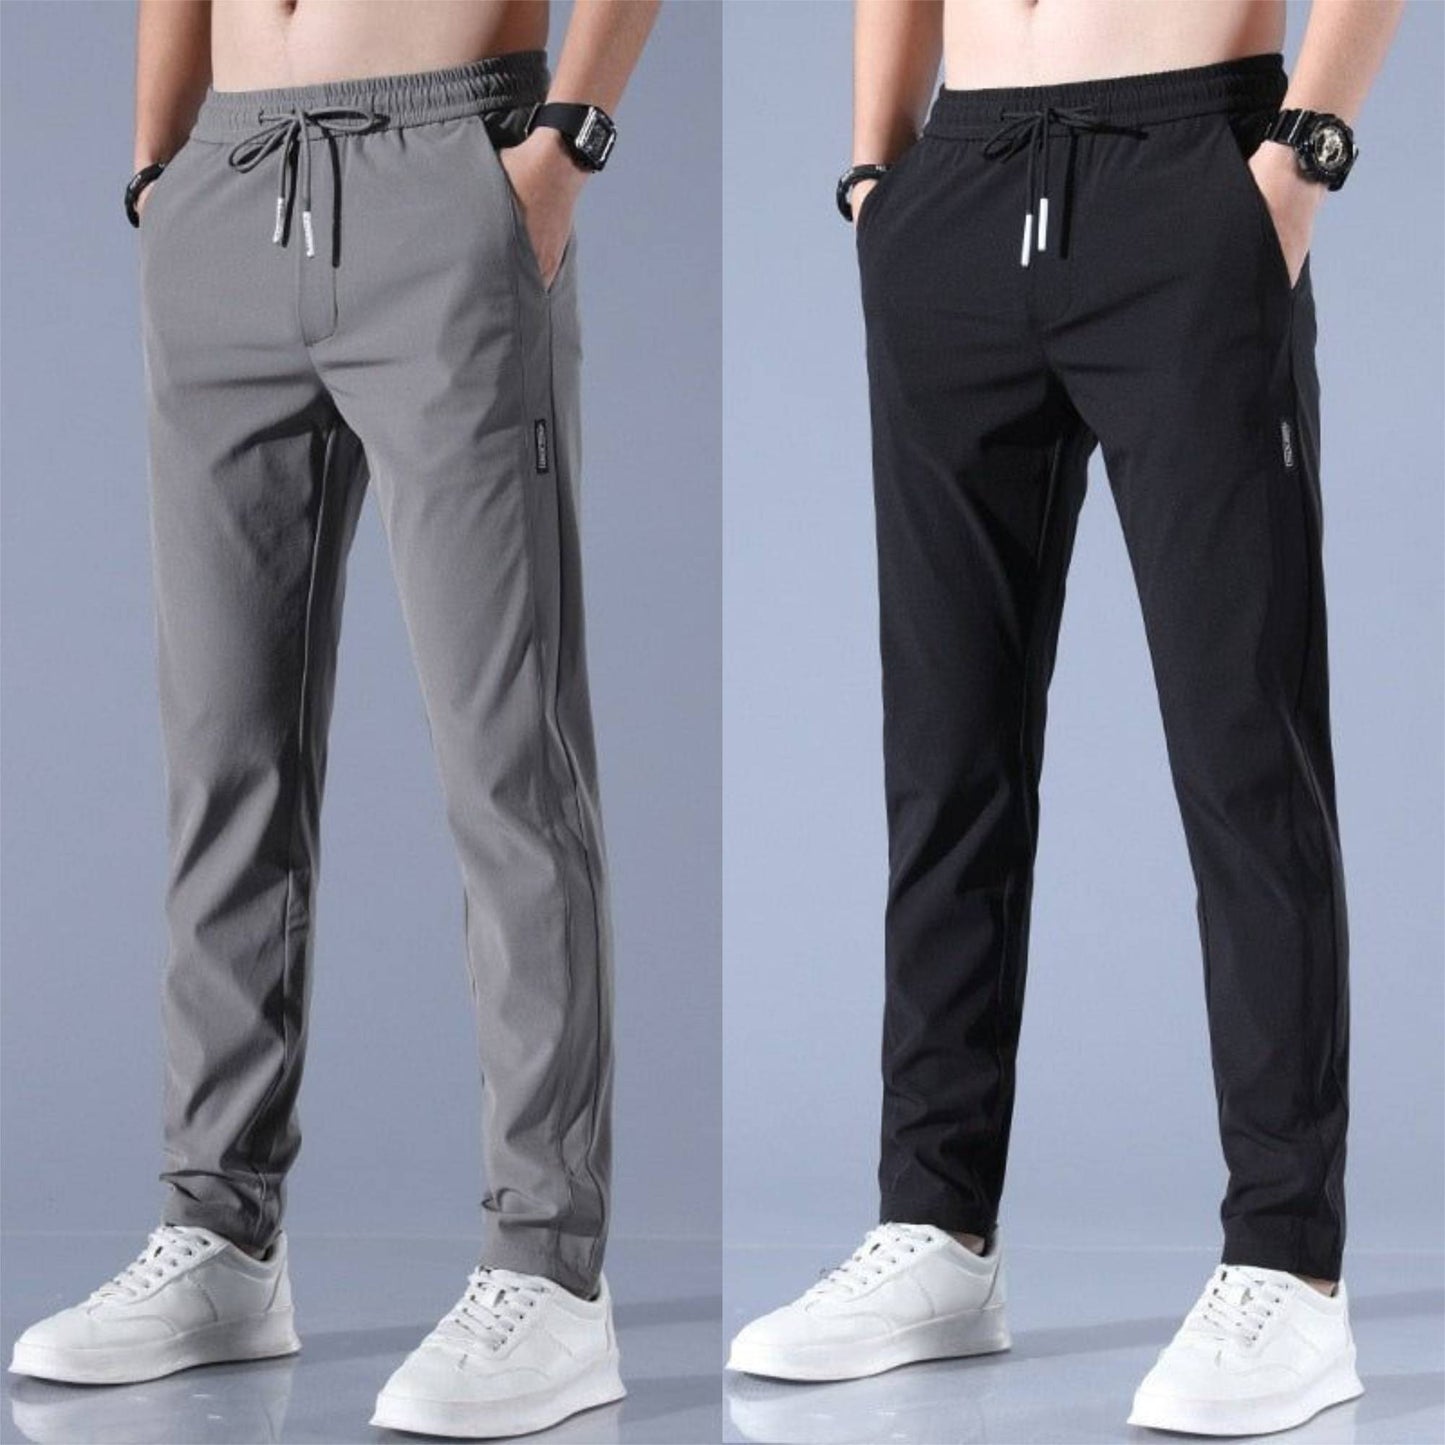 Stefan | SpeedDry Flexible Pants (1+1 FREE) - Dark Gray / Black / L - AMVIM